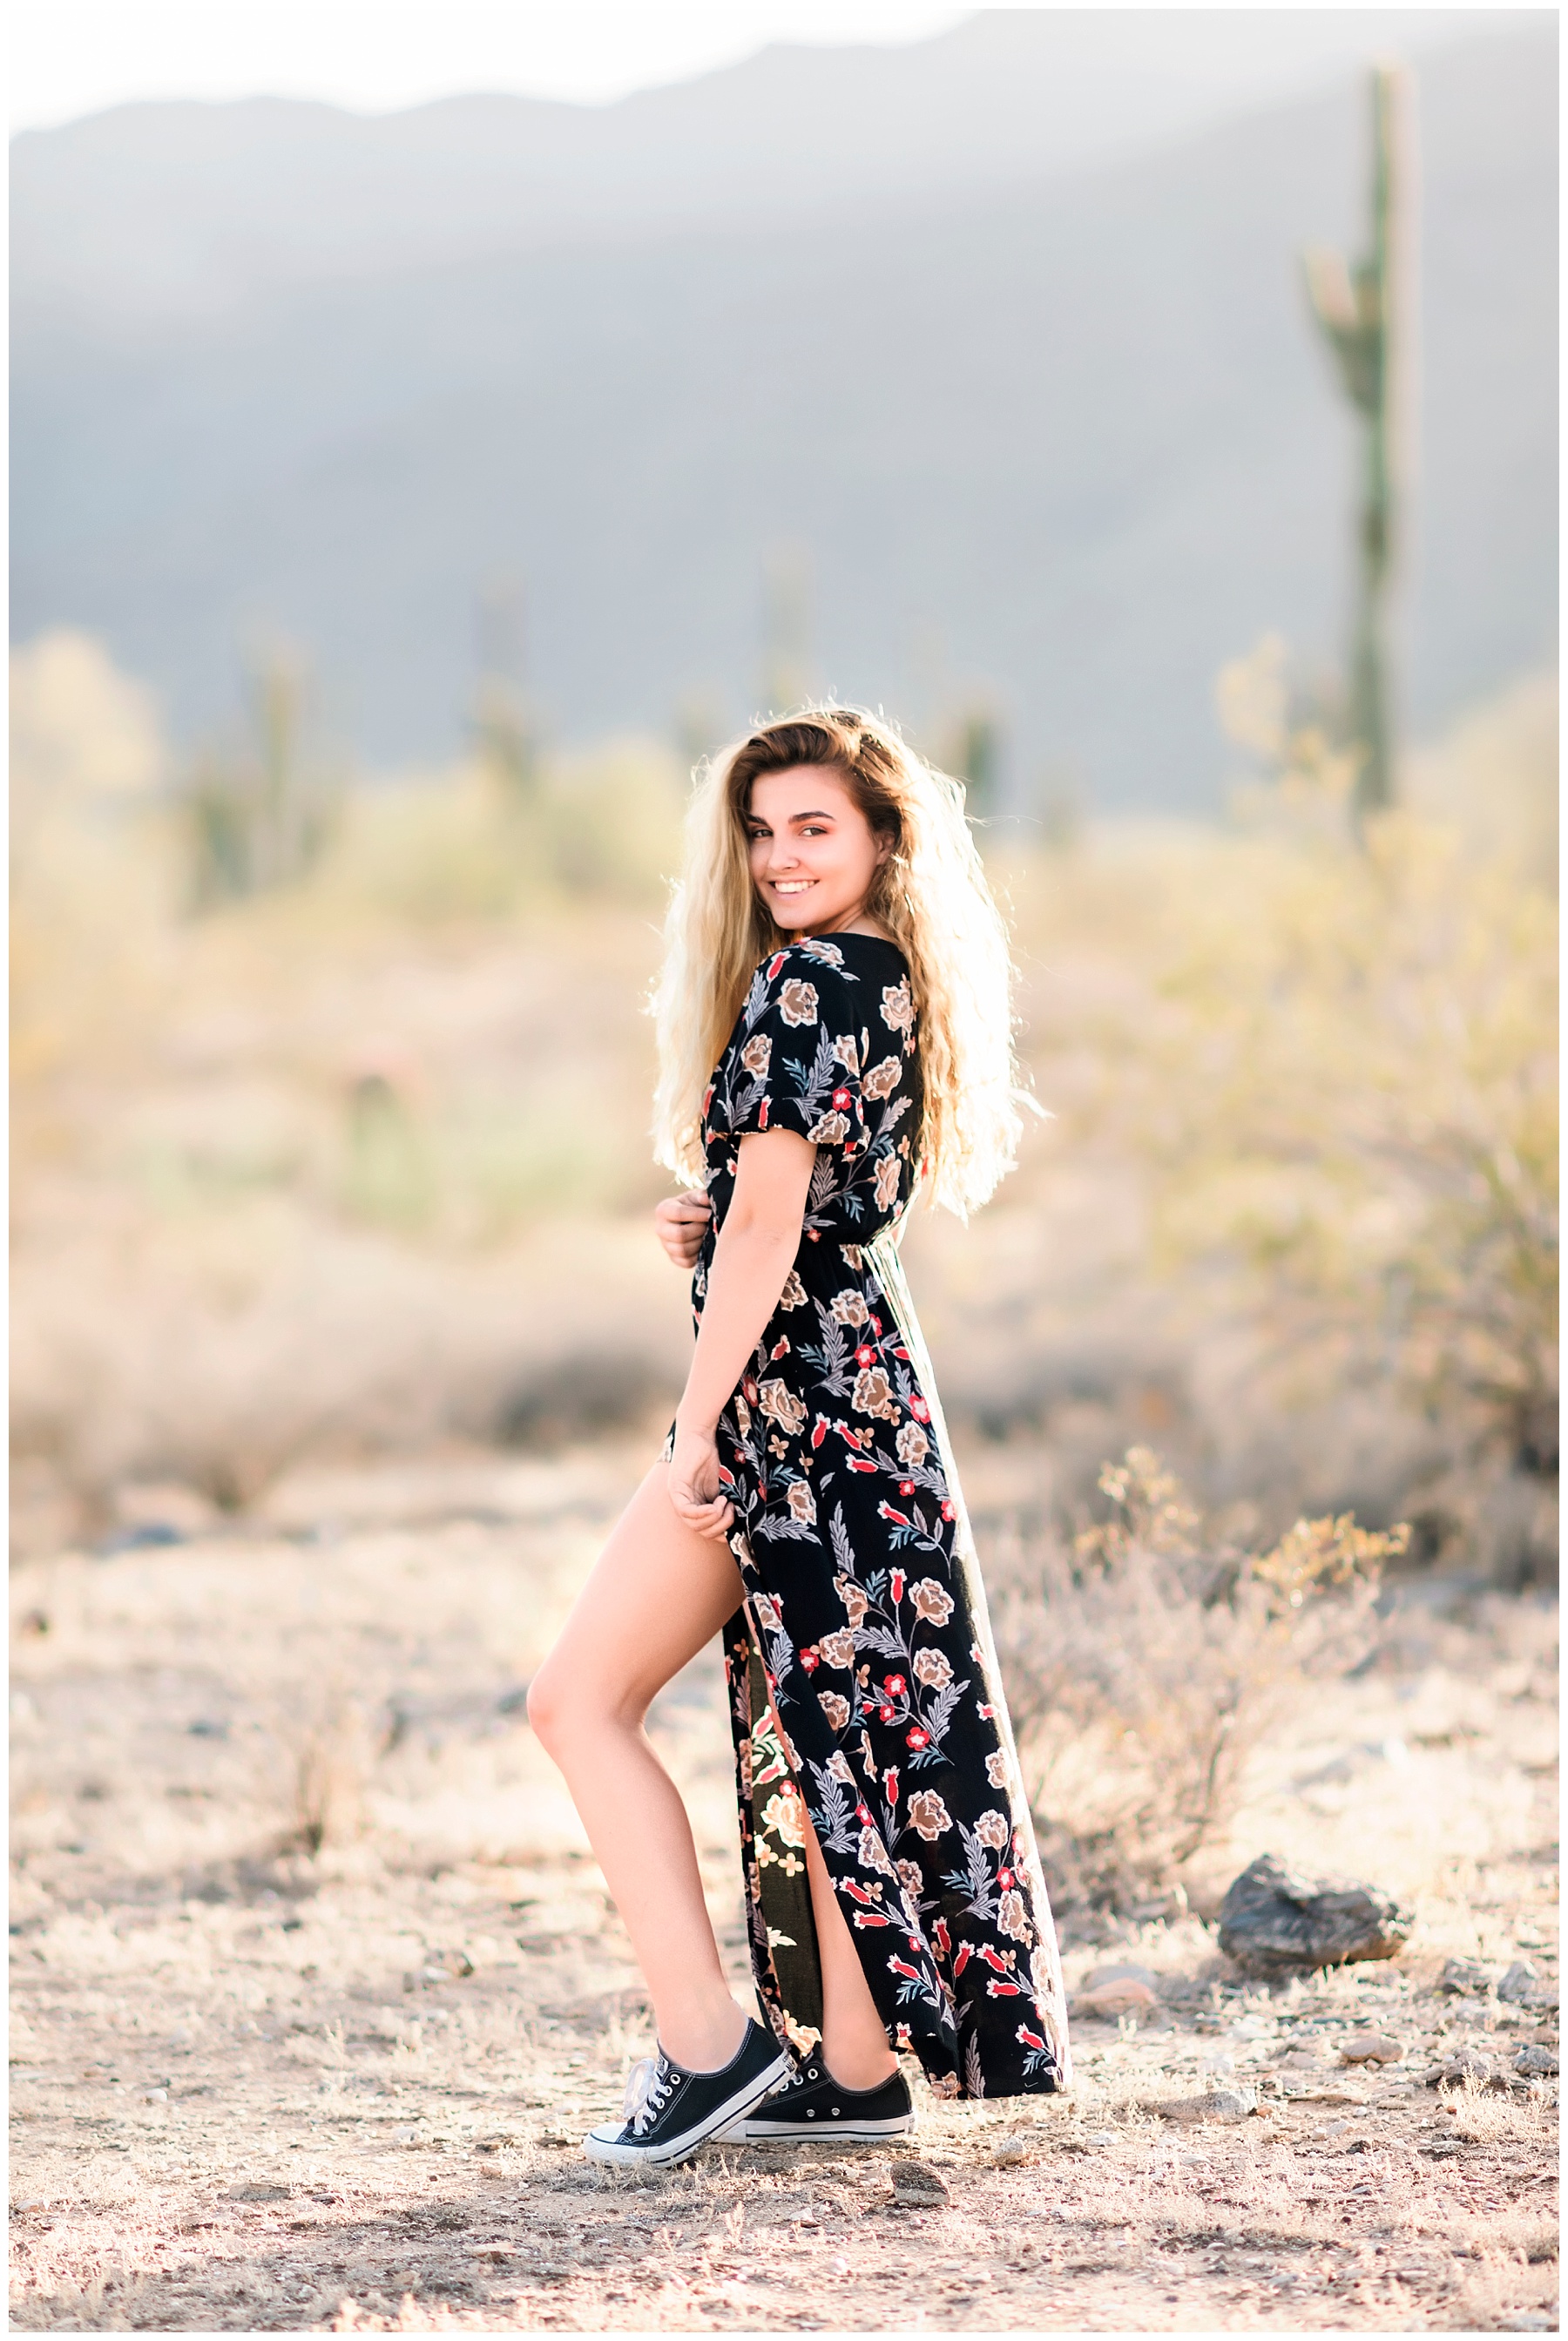 Kaitlyn's-Senior-Photos-White-Tank-Mountains-Arizona-Ashley-Flug-Photography13.jpg